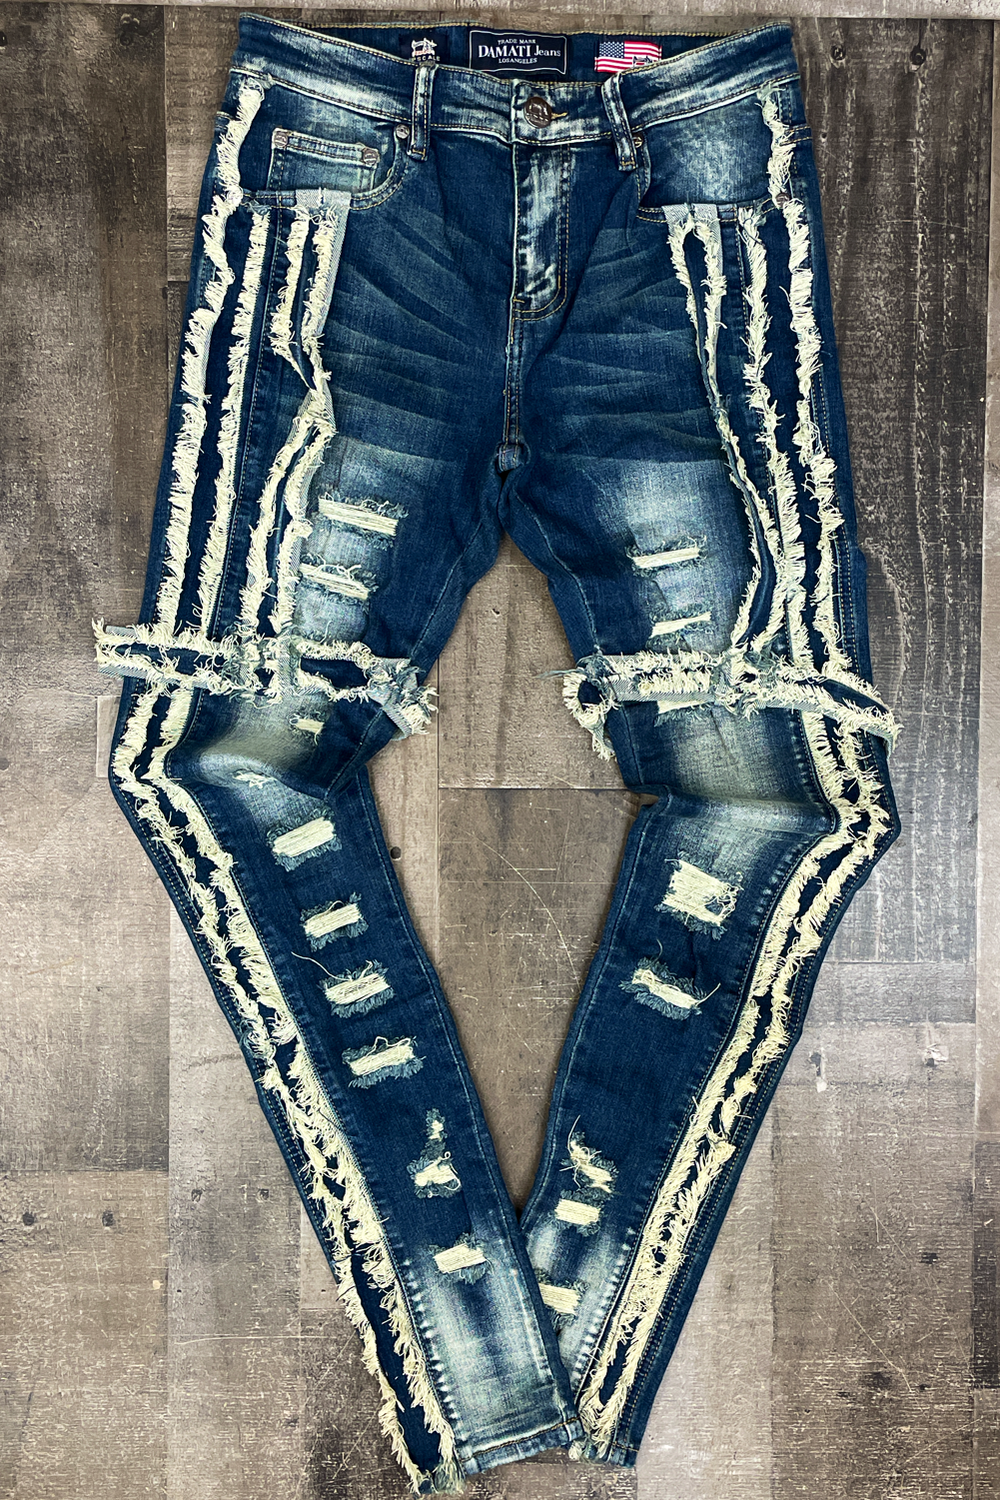 DAMATI- edison tan blue denim jeans